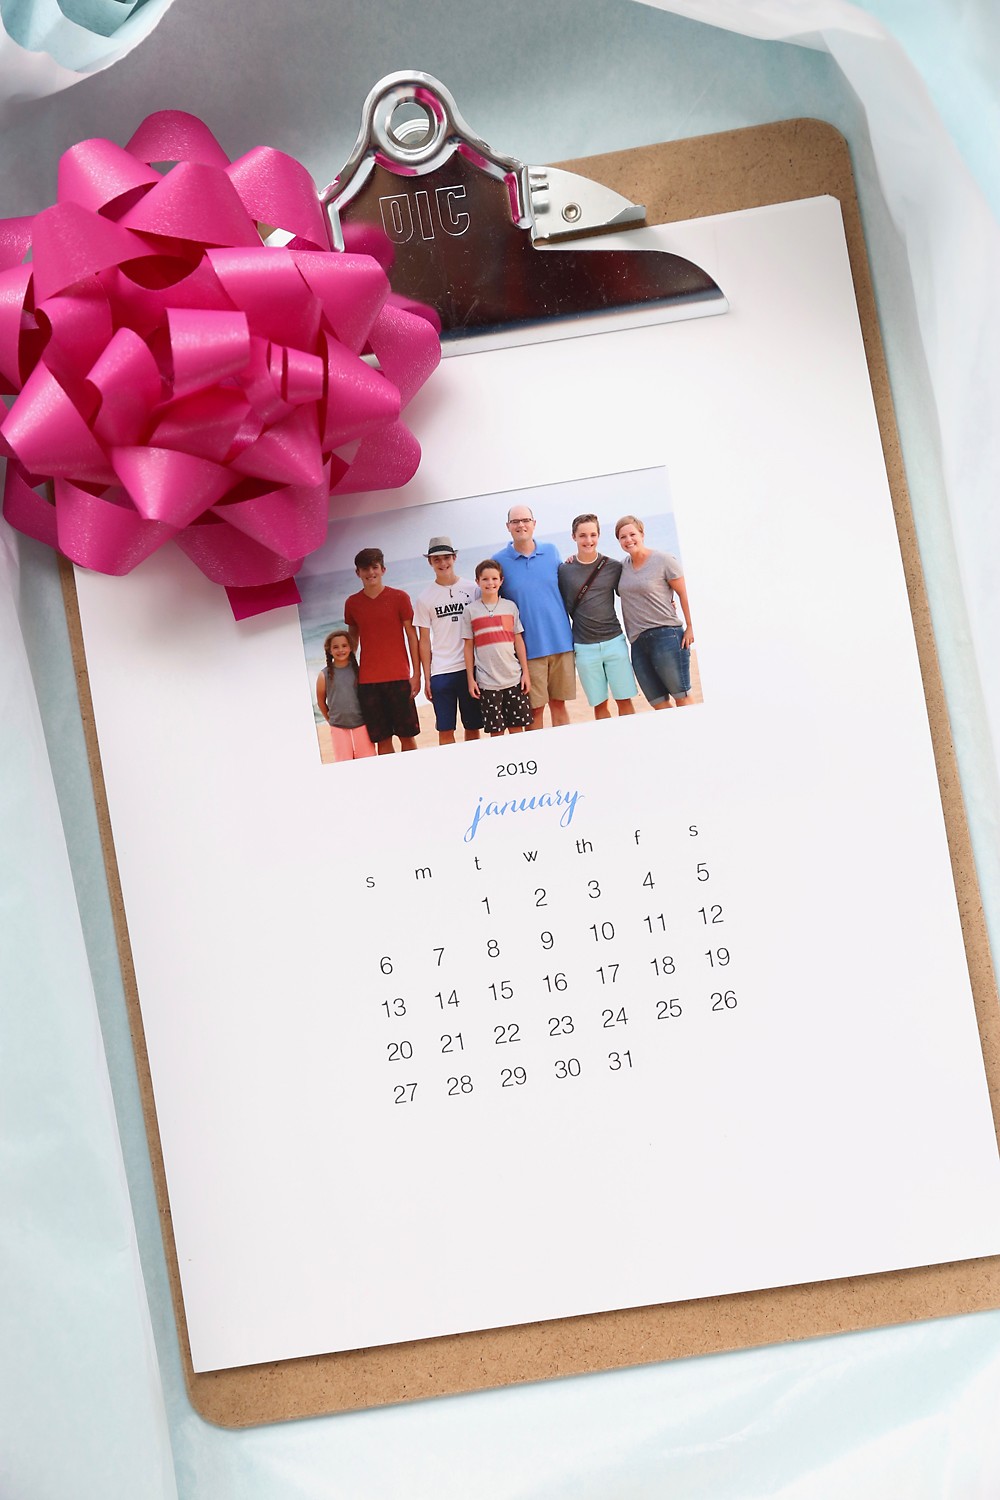 Make a personalized 2020 photo calendar free templates